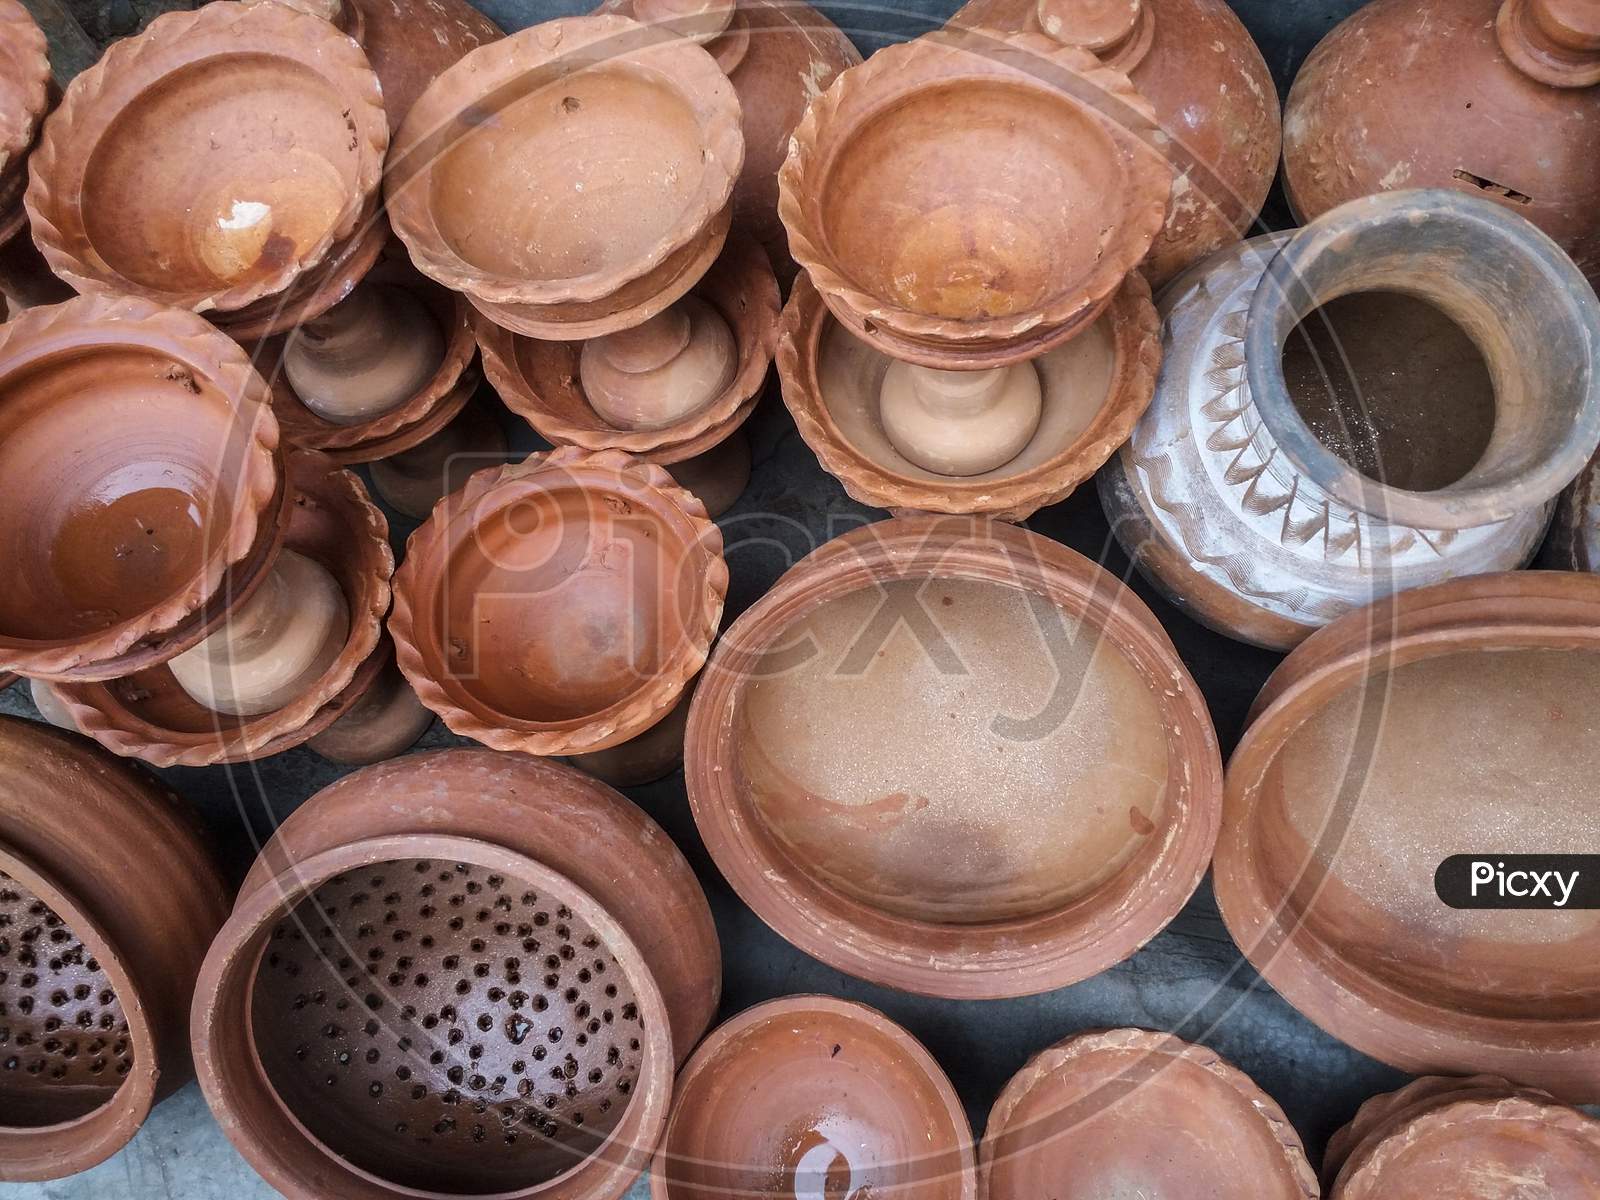 The showcase of handmade ceramic pottery in a roadside market